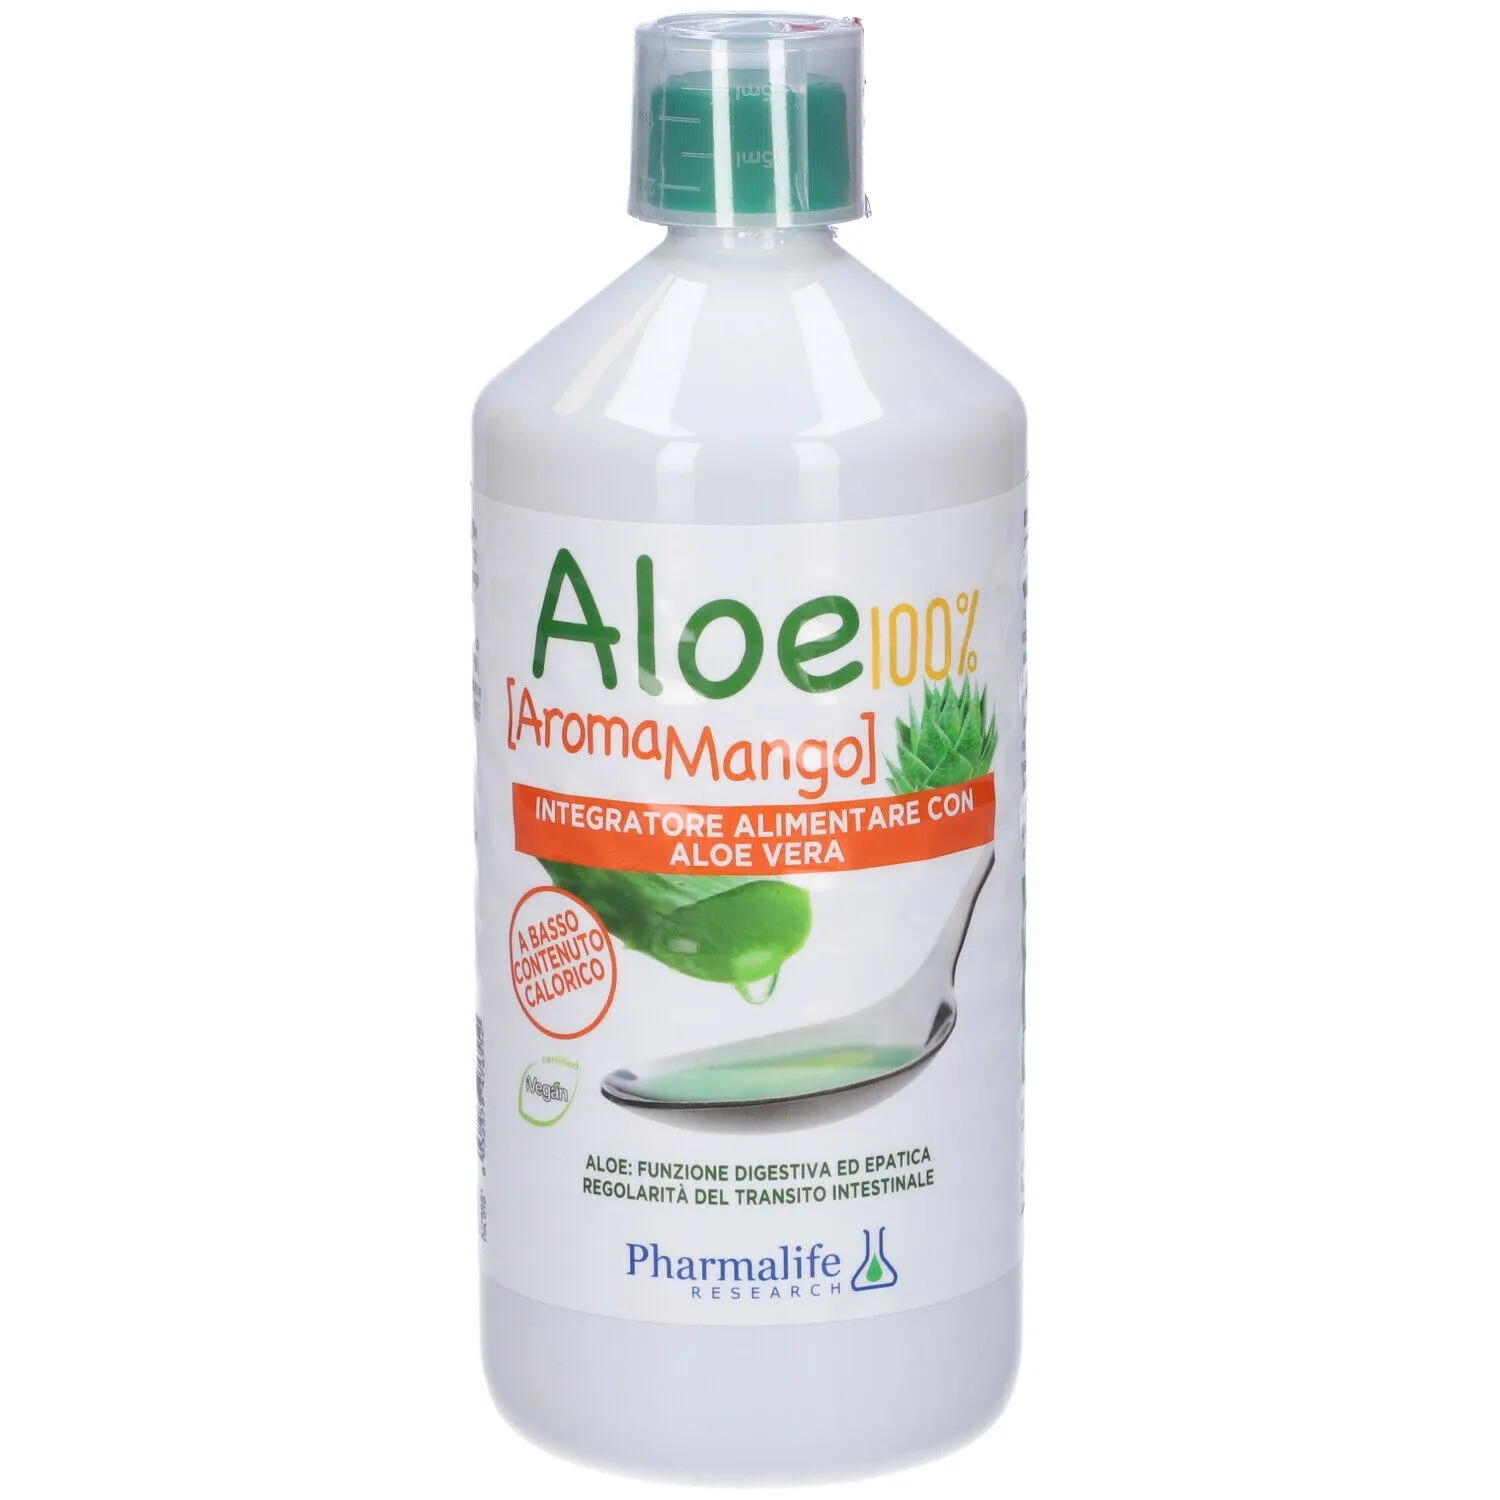 Pharmalife Aloe 100% Aroma Mango Integratore Alimentare